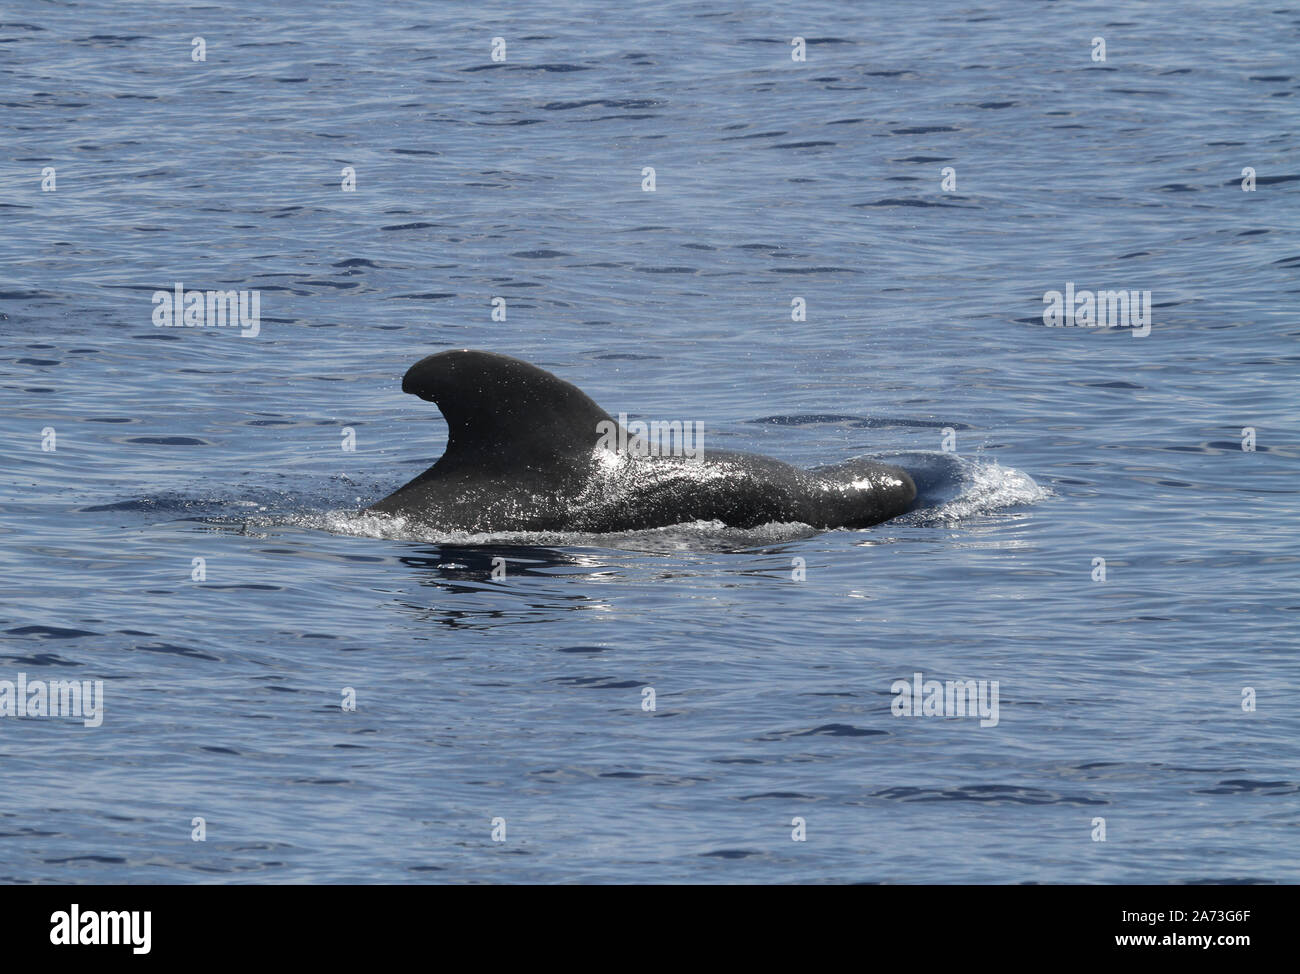 A breve alettato di Balene Pilota Foto Stock